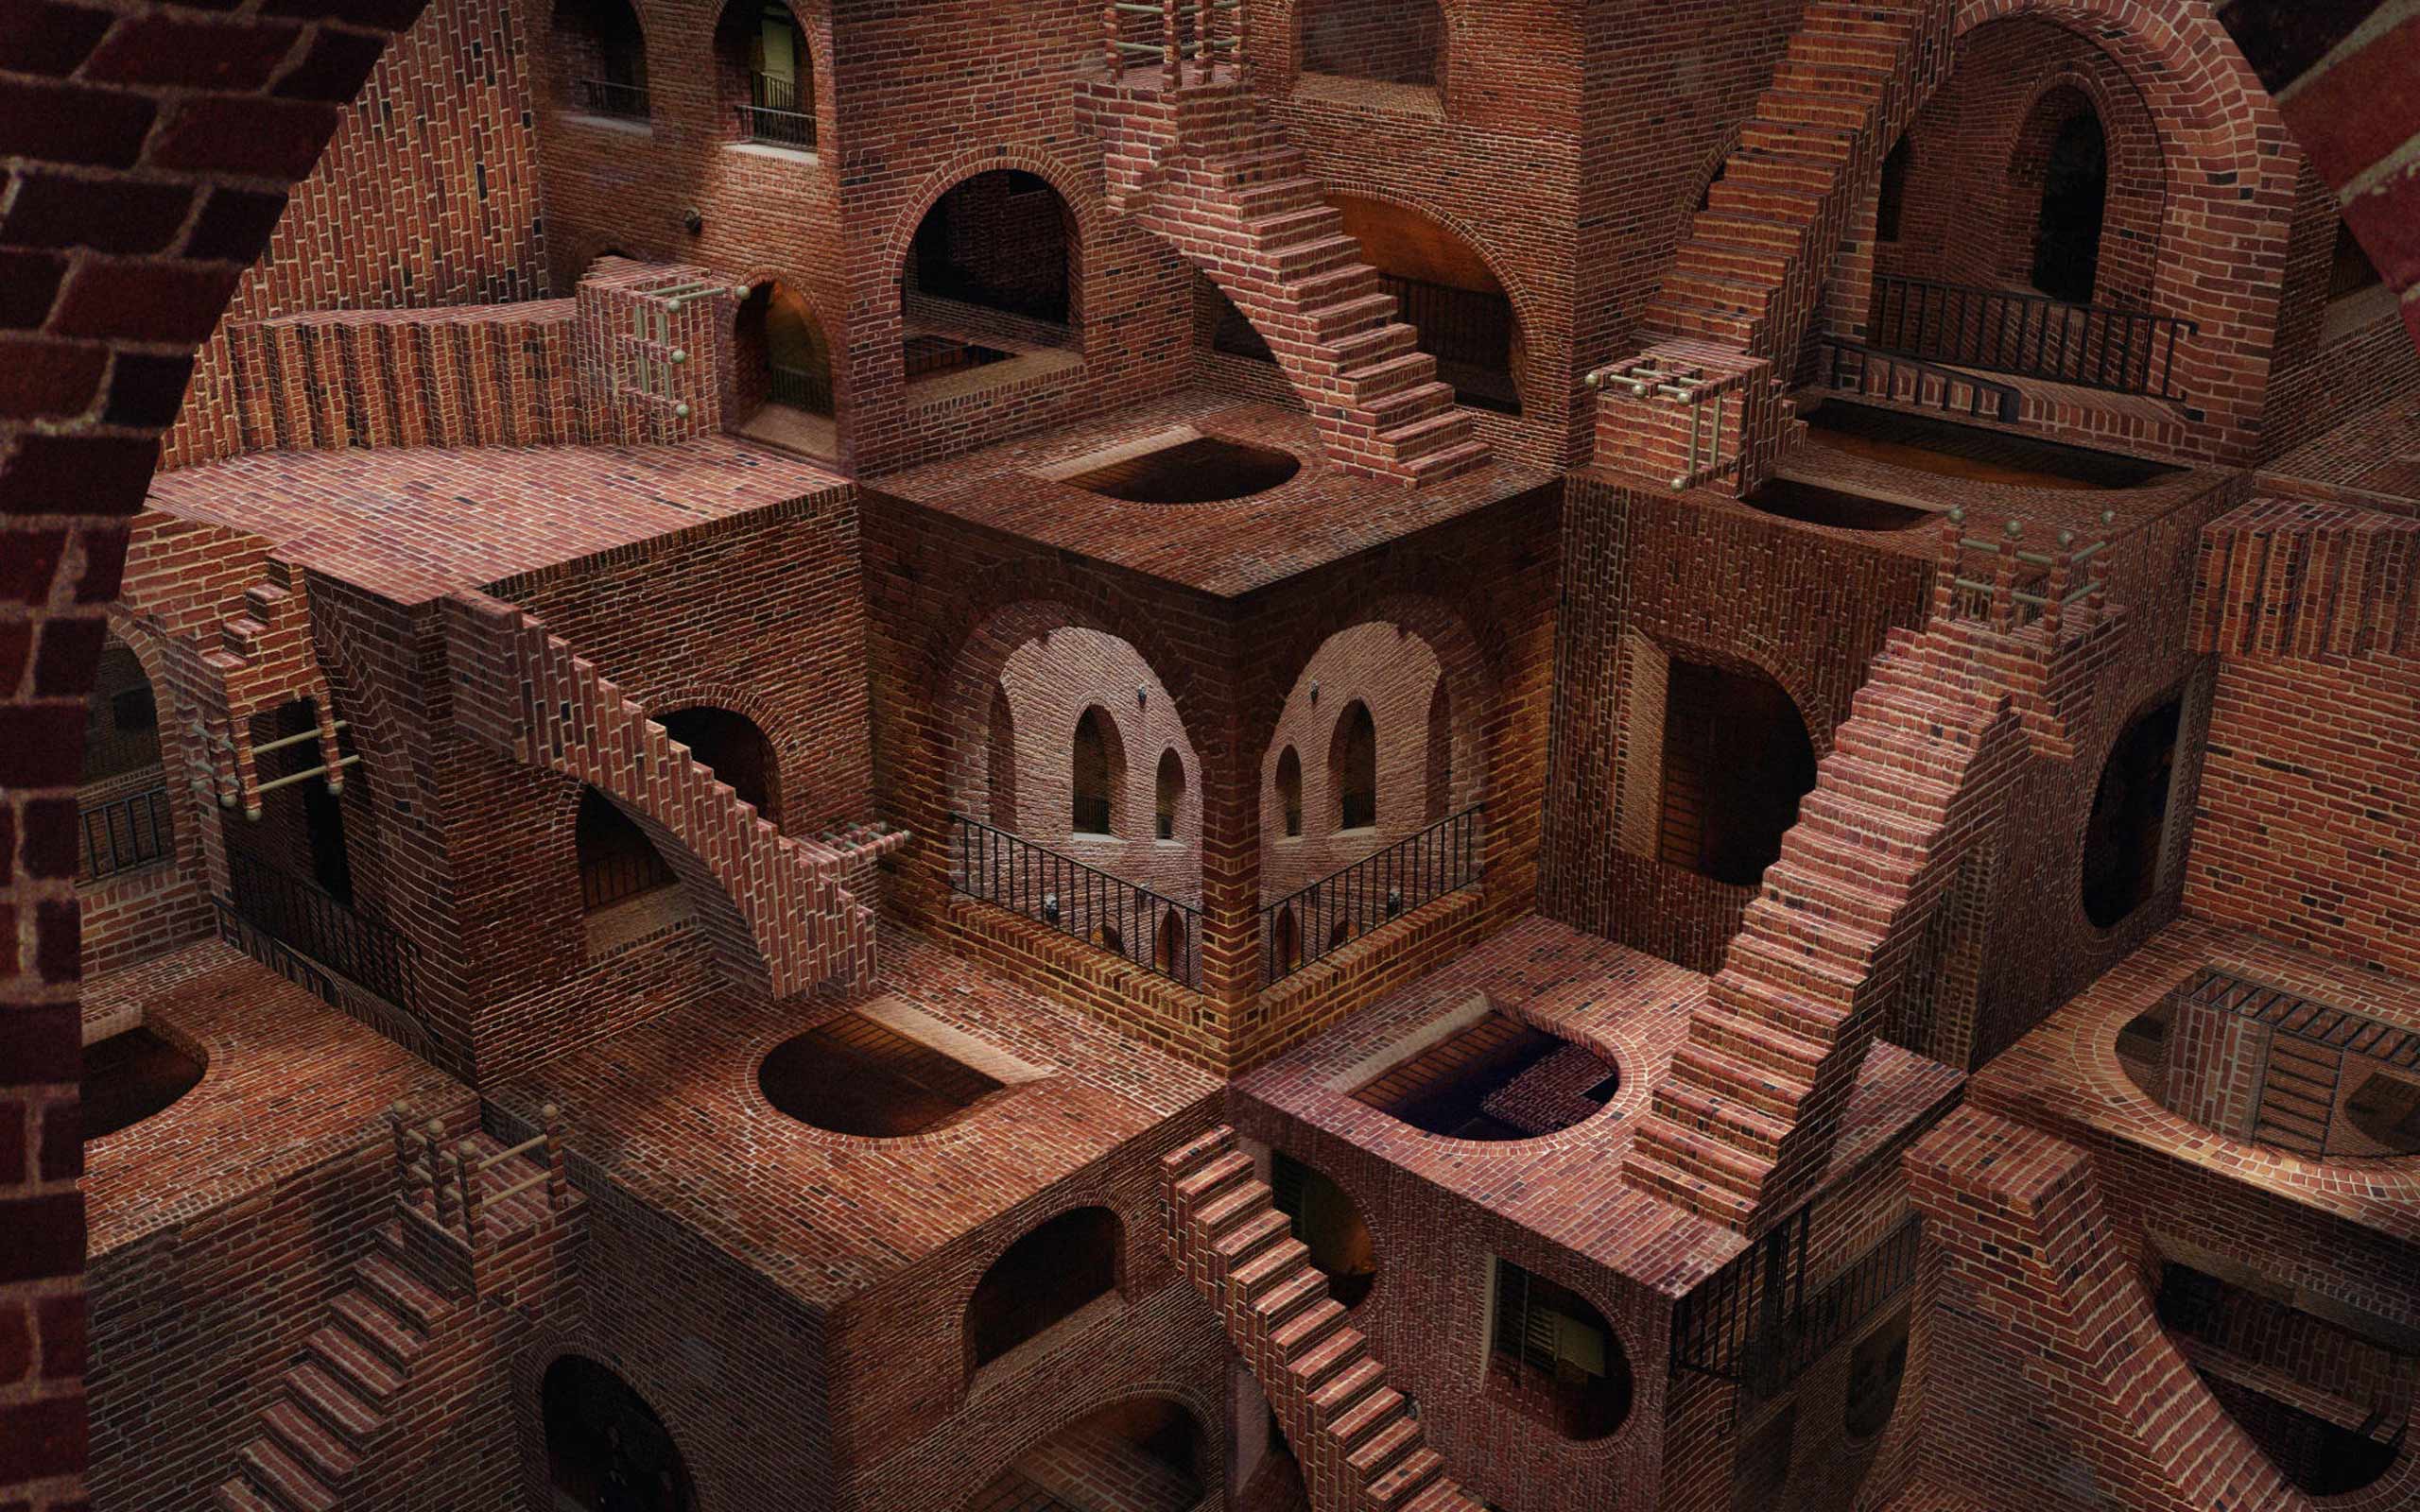 General 2560x1600 digital art optical illusion brown M. C. Escher stairs building bricks surreal fence arch CGI